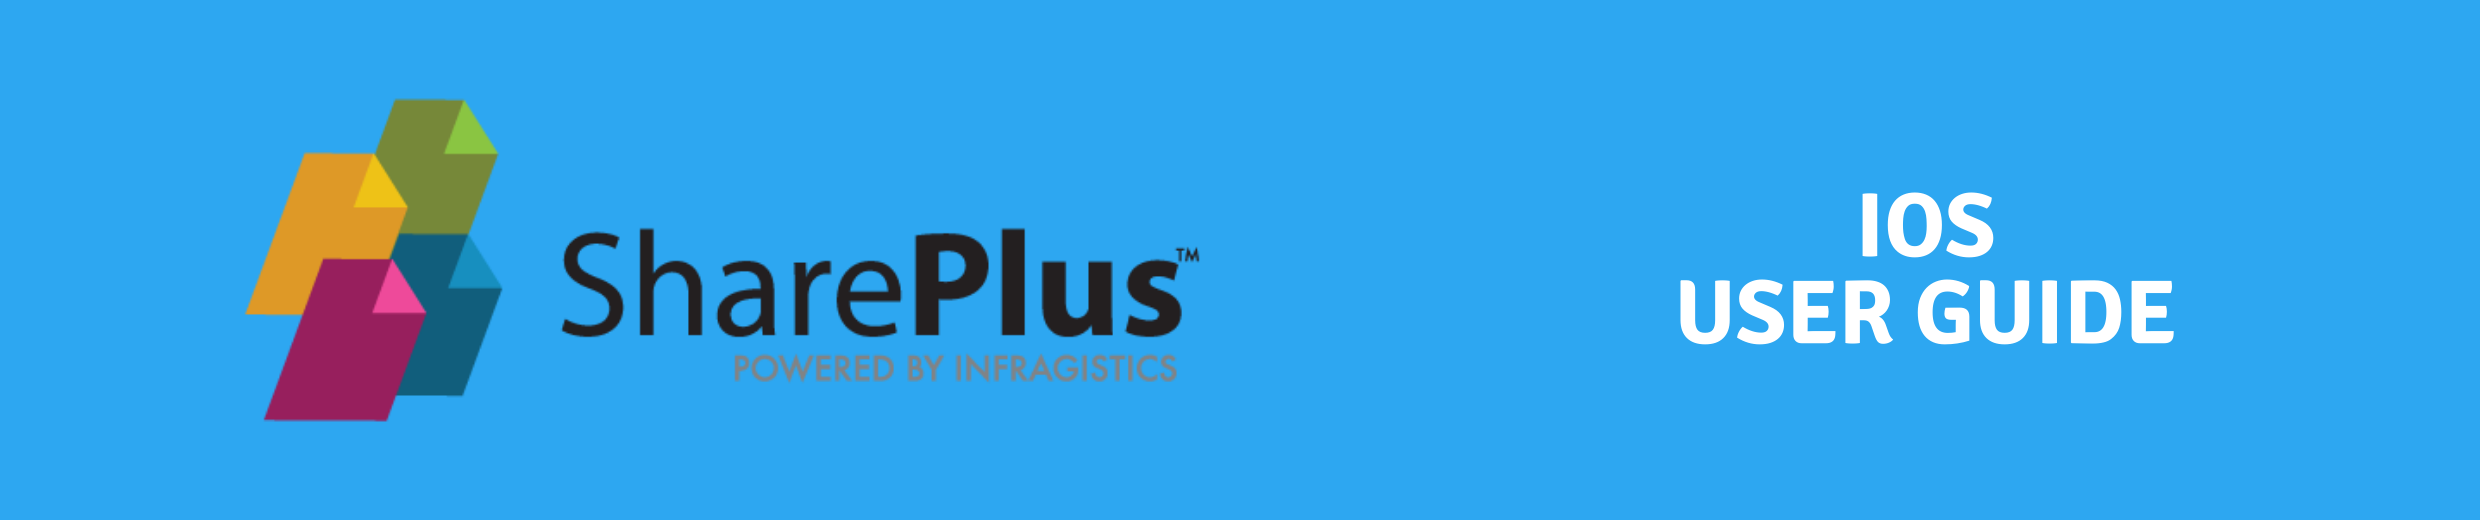 SharePlus iOS User Guide